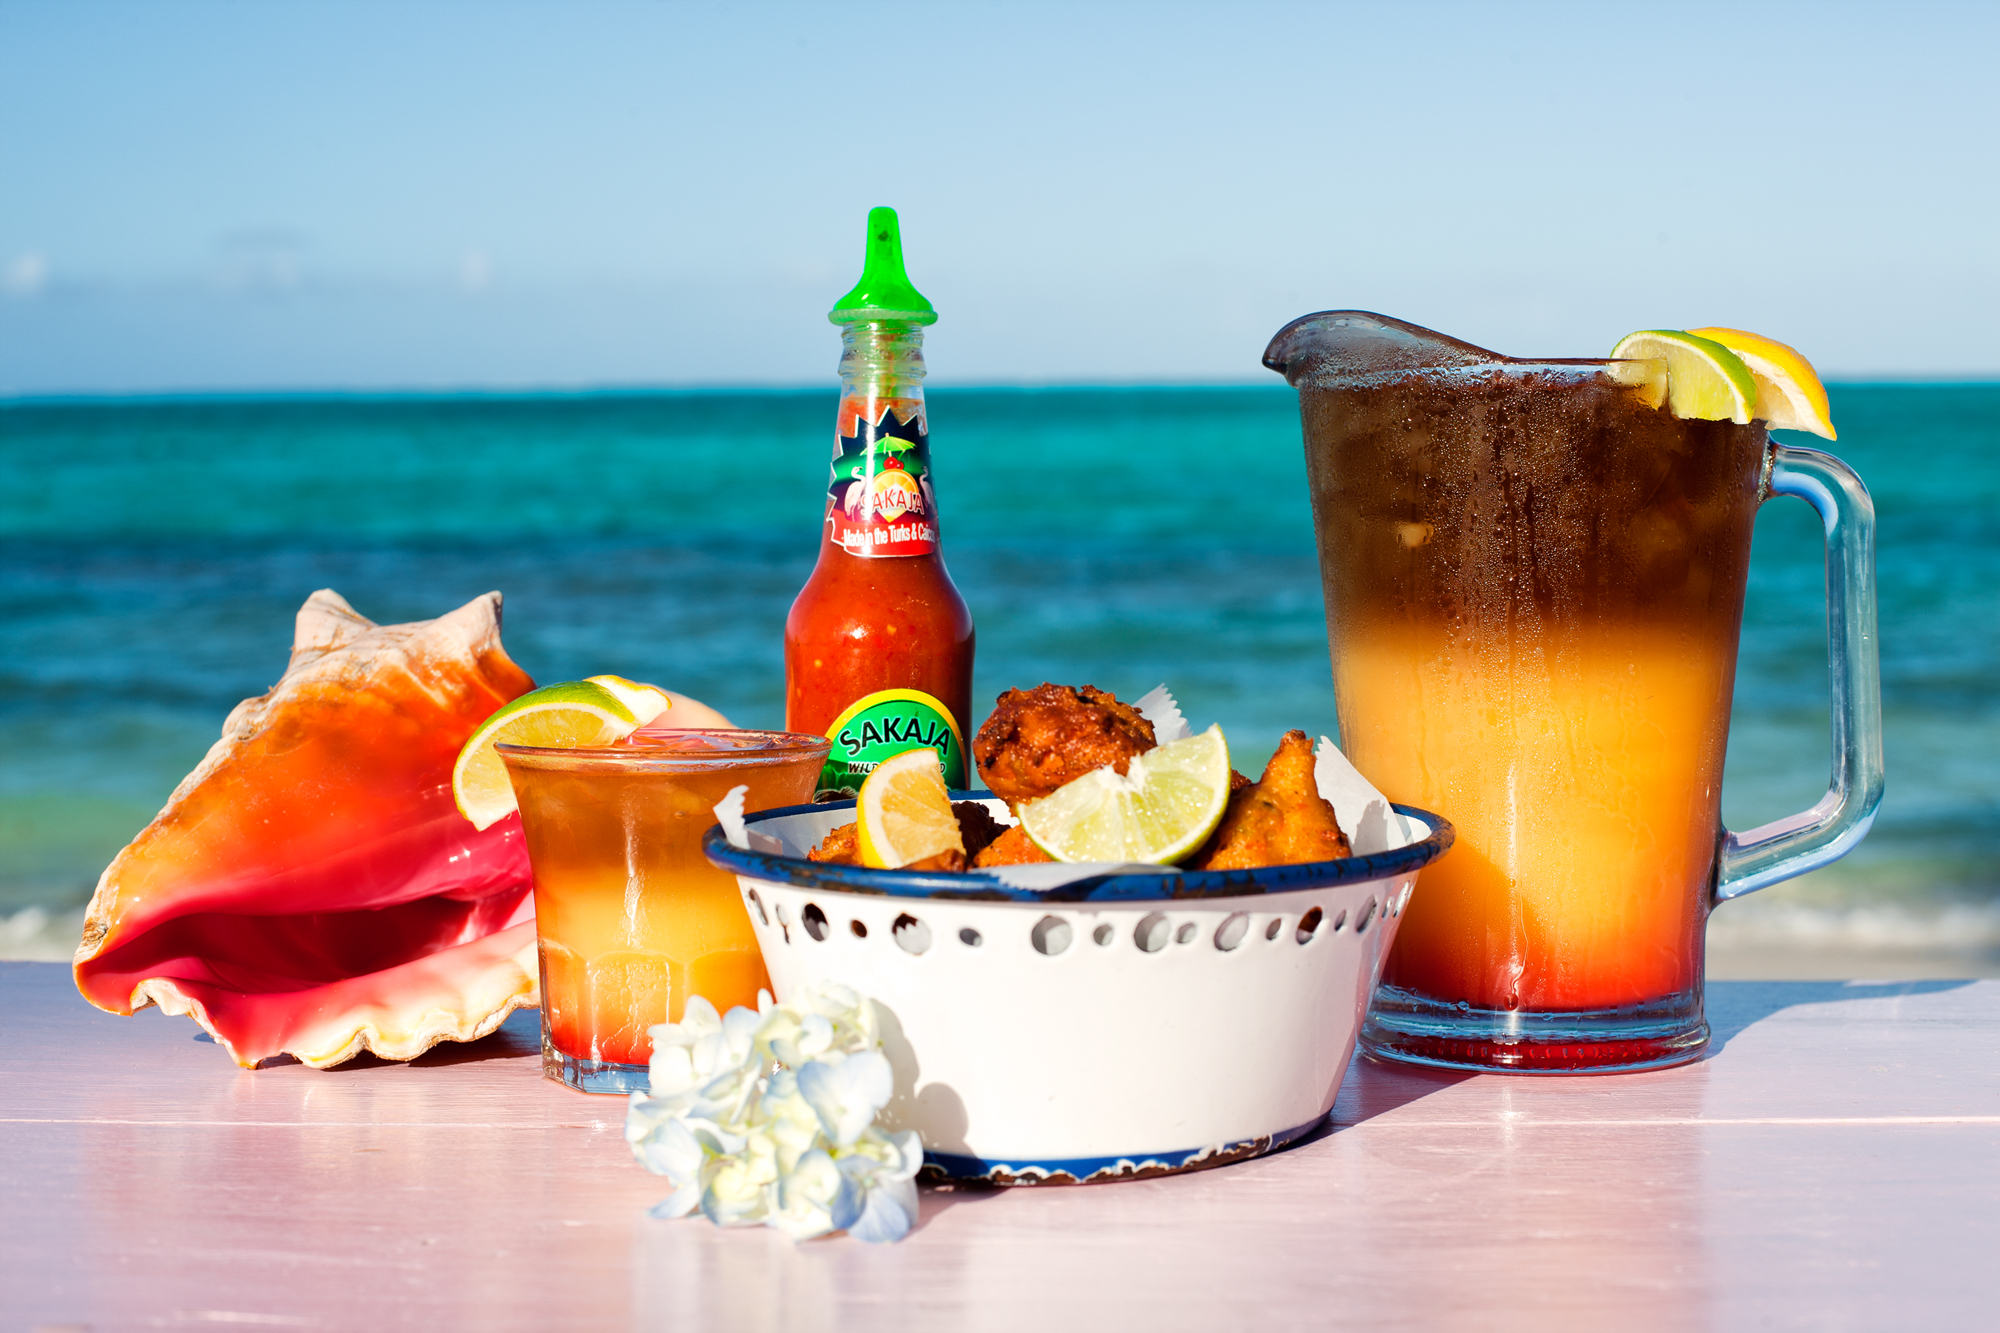 Turks & Caicos food table. Martin A Lingnau, Mermaid Pictures